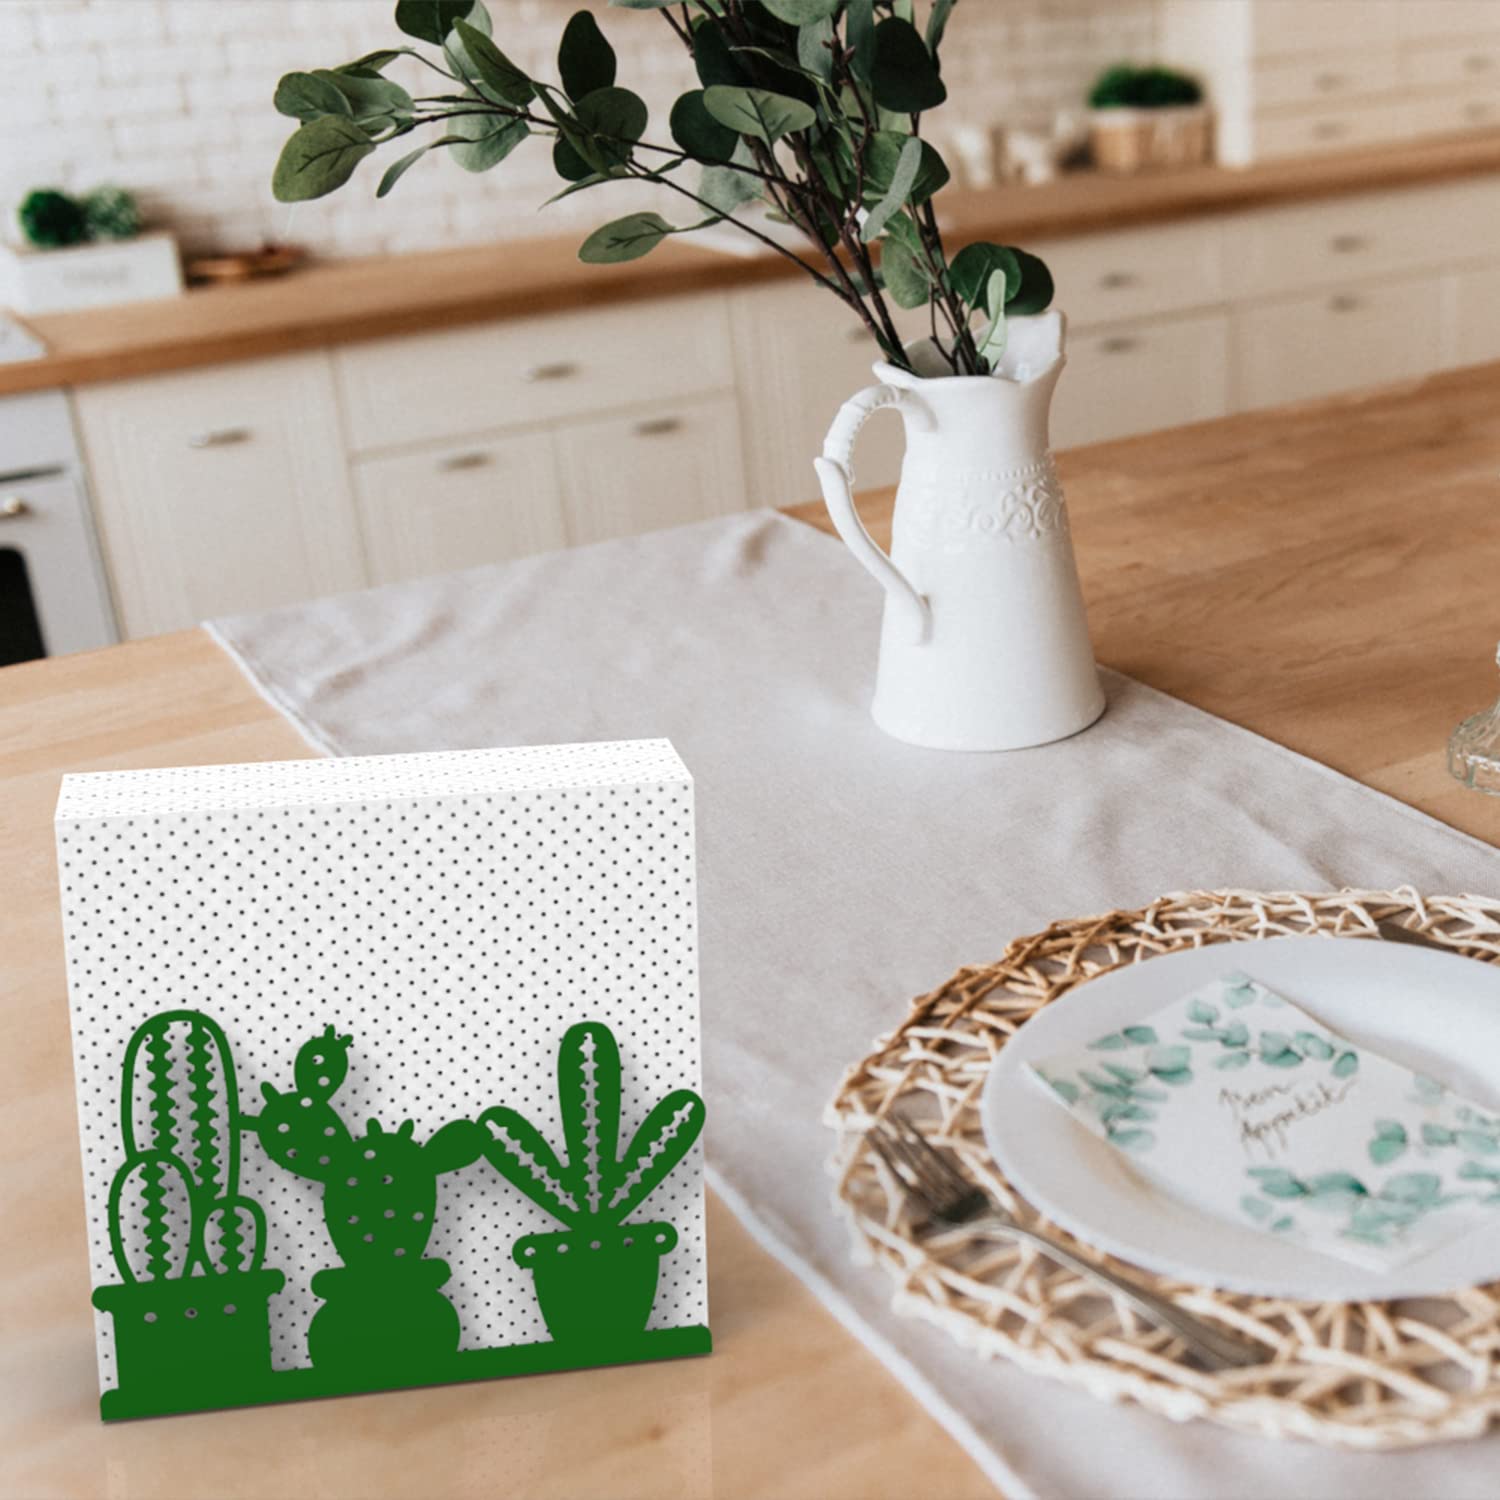 Decorelax Metal Napkin Holder for Home Kitchen Restaurant Picnic - Cactus Design Tabletop Paper Organizer Upright Tissue Dispenser (Green)